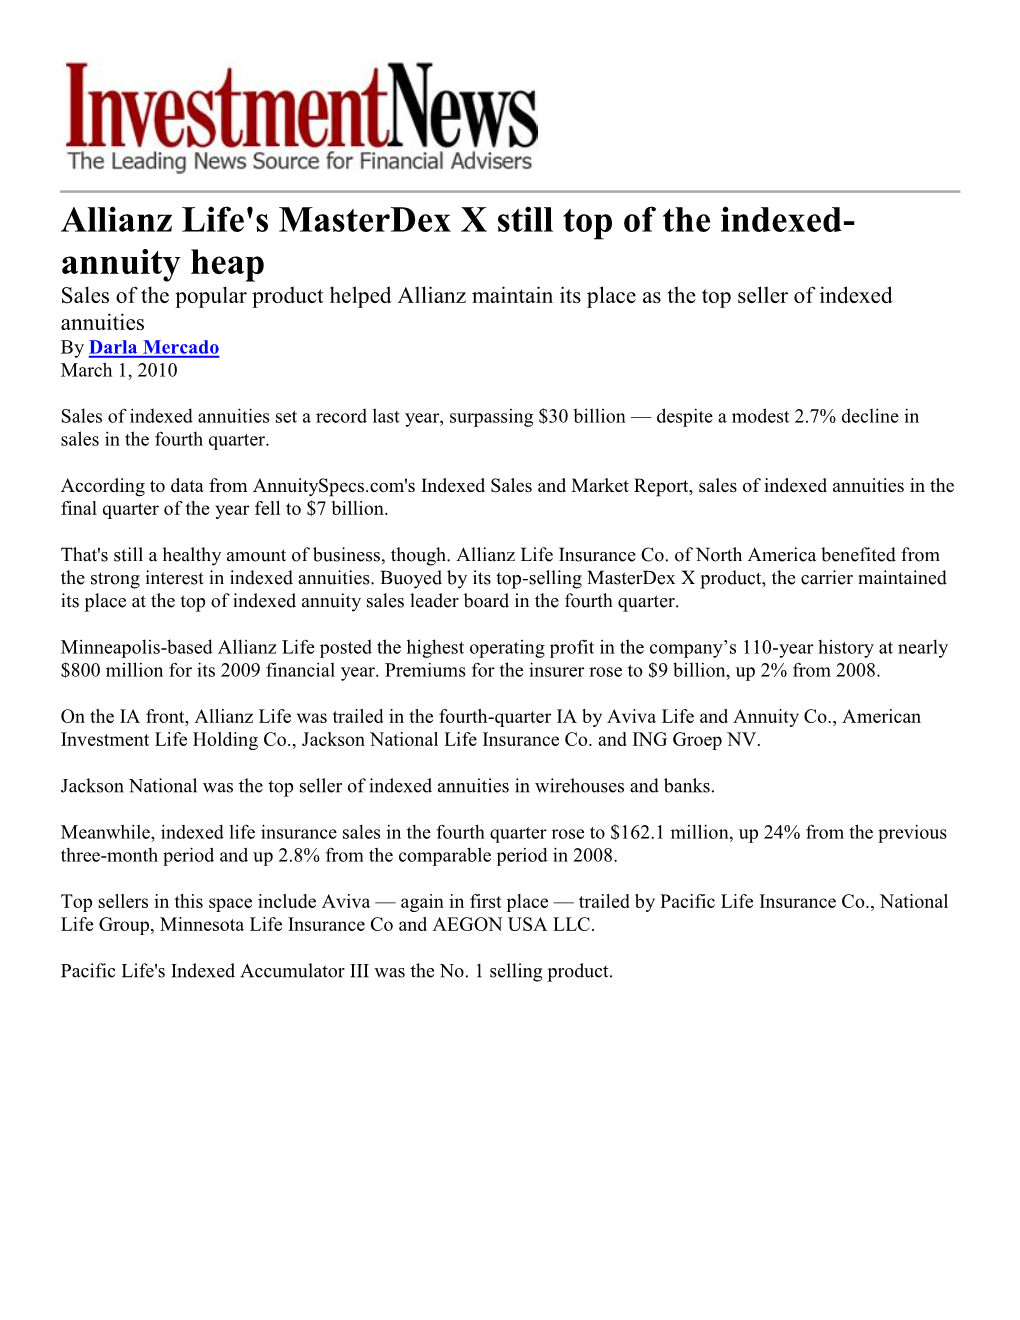 Allianz Life's Masterdex X Still Top of the Indexed- Annuity Heap